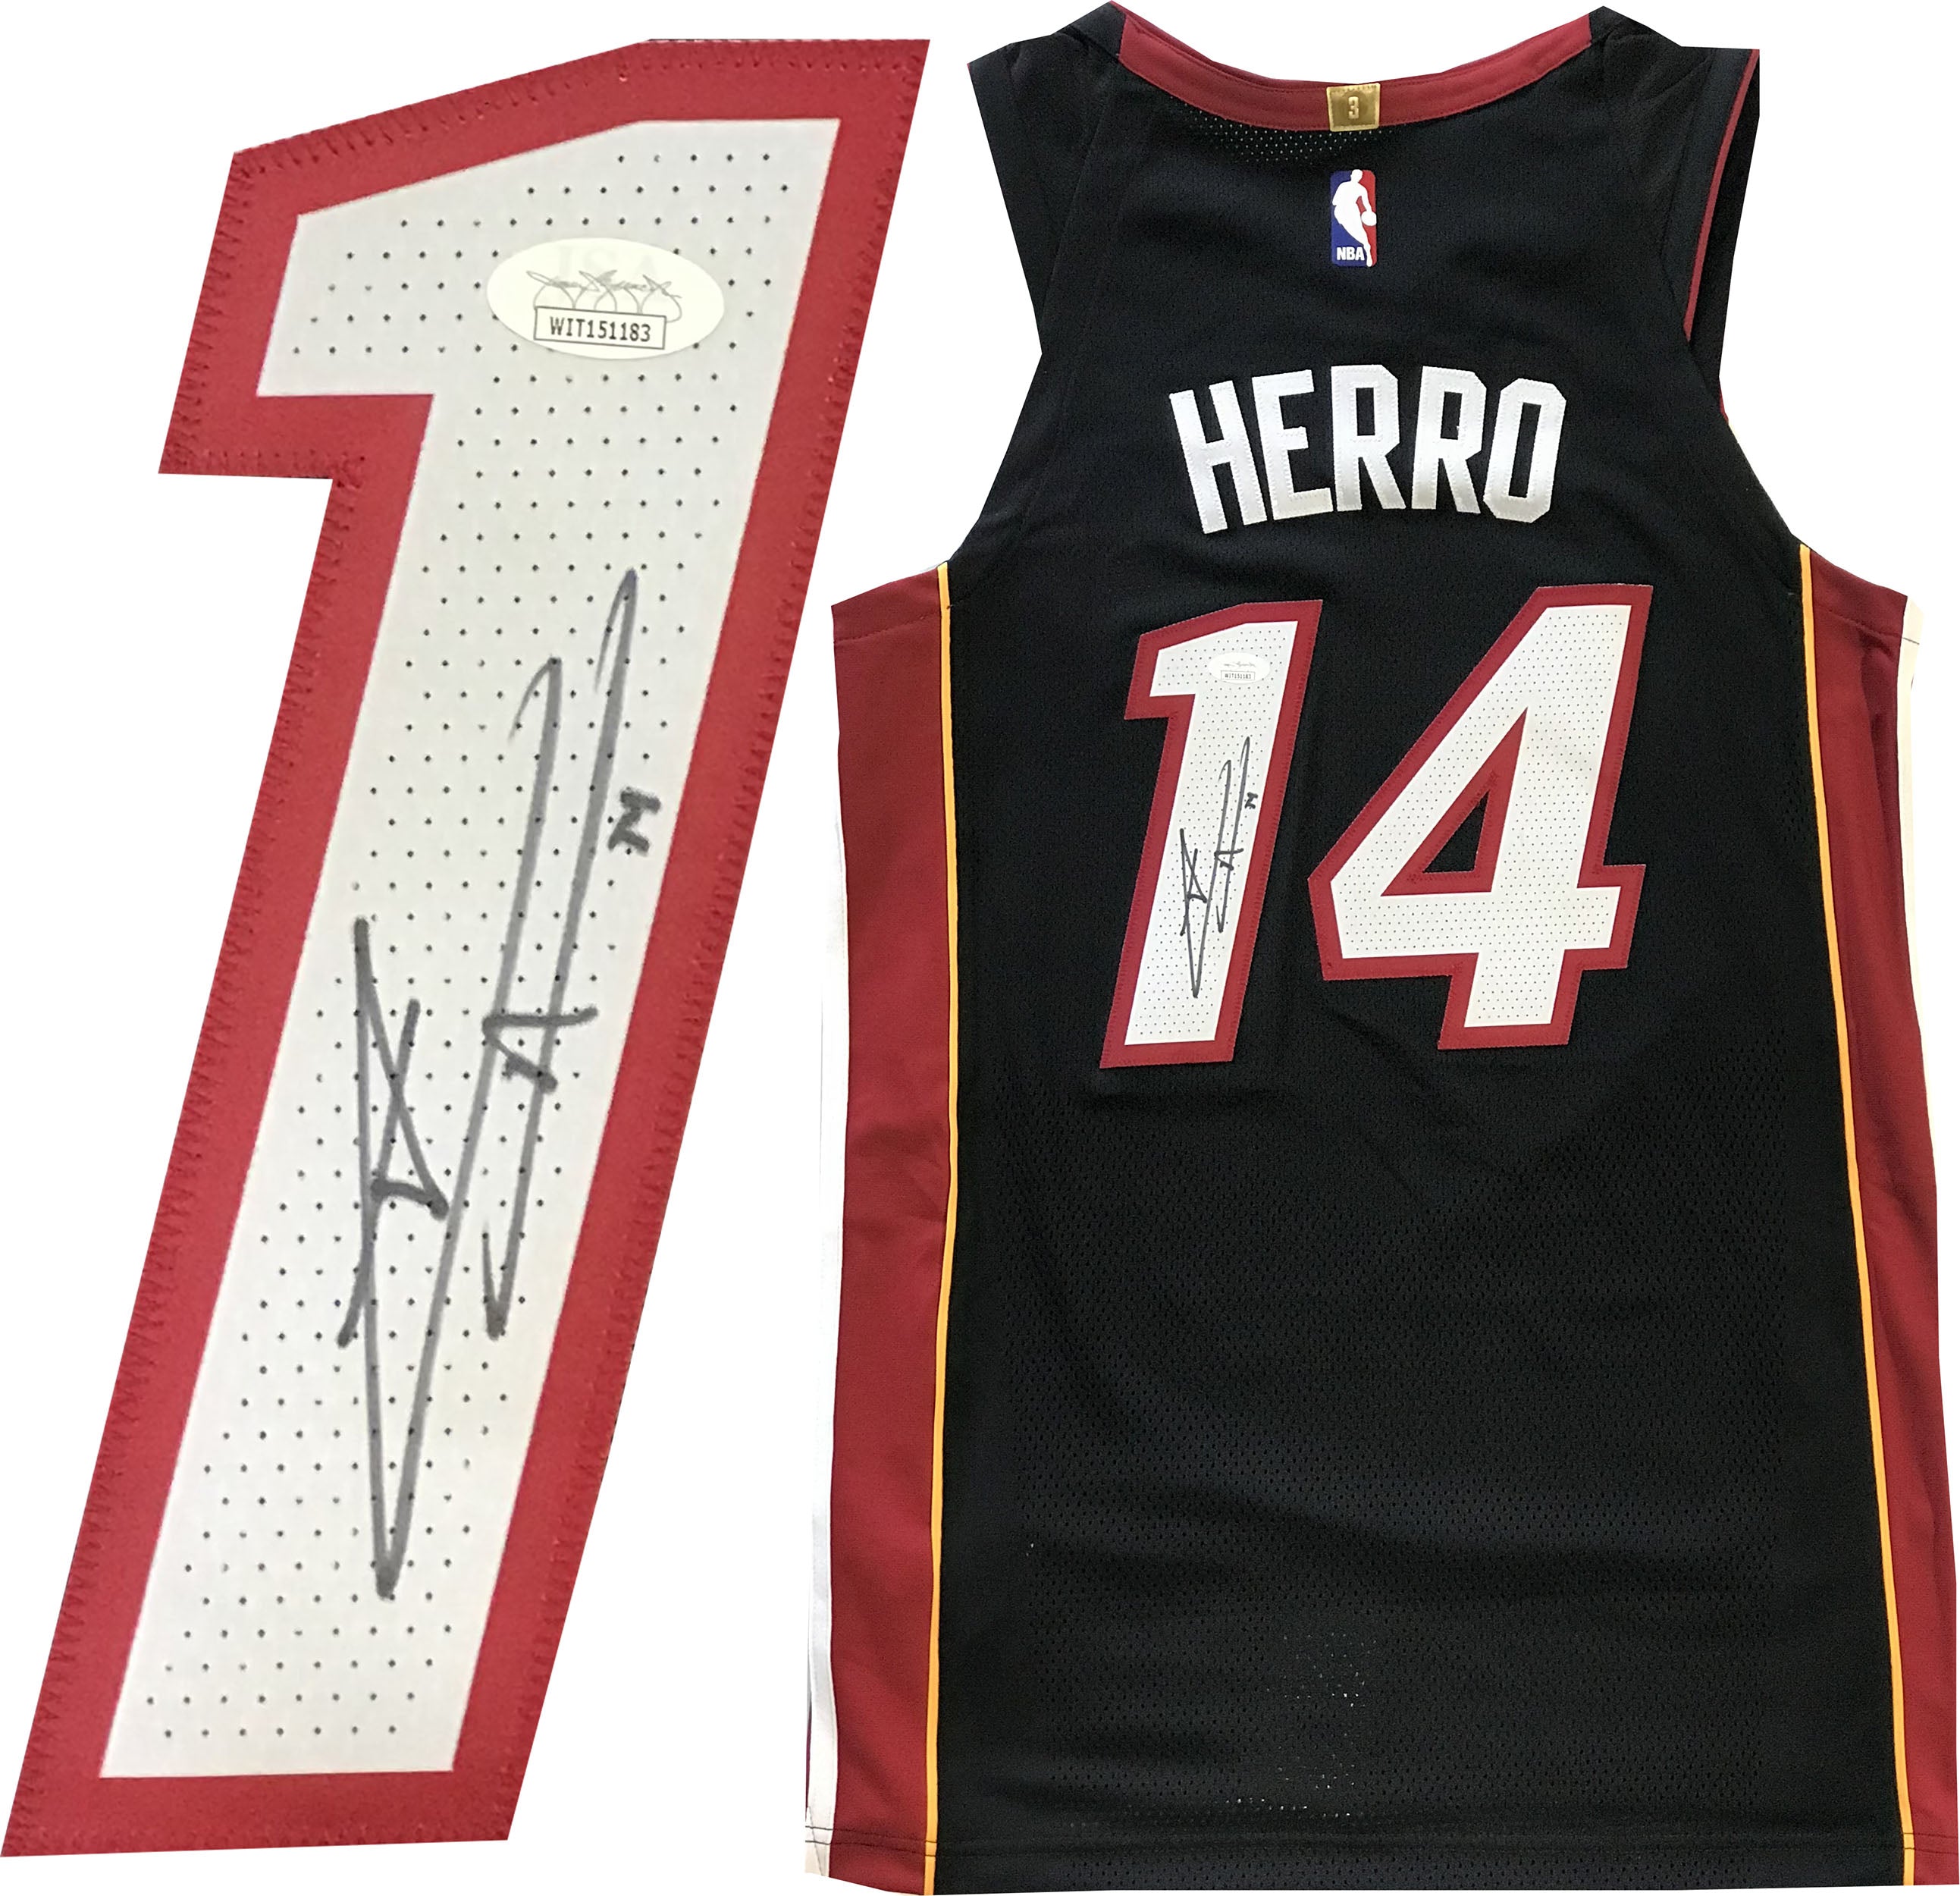 Tyler Herro Boy Wonder Autographed Miami Heat ViceNight Swingman Jersey  (JSA)